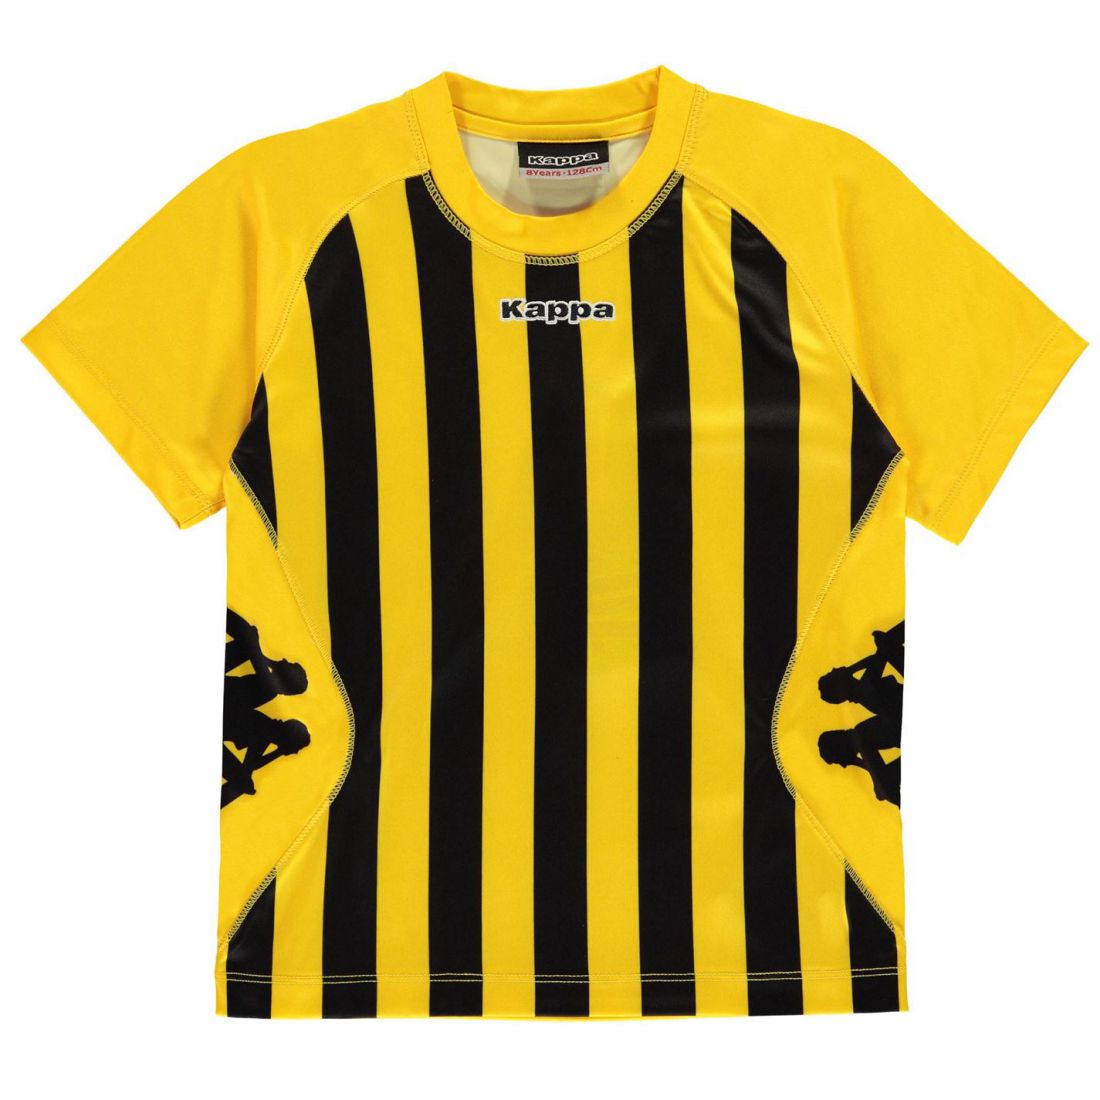 Kappa Kids Boys Barletta SS 6 Juniors Short Sleeve Performance Shirt | eBay